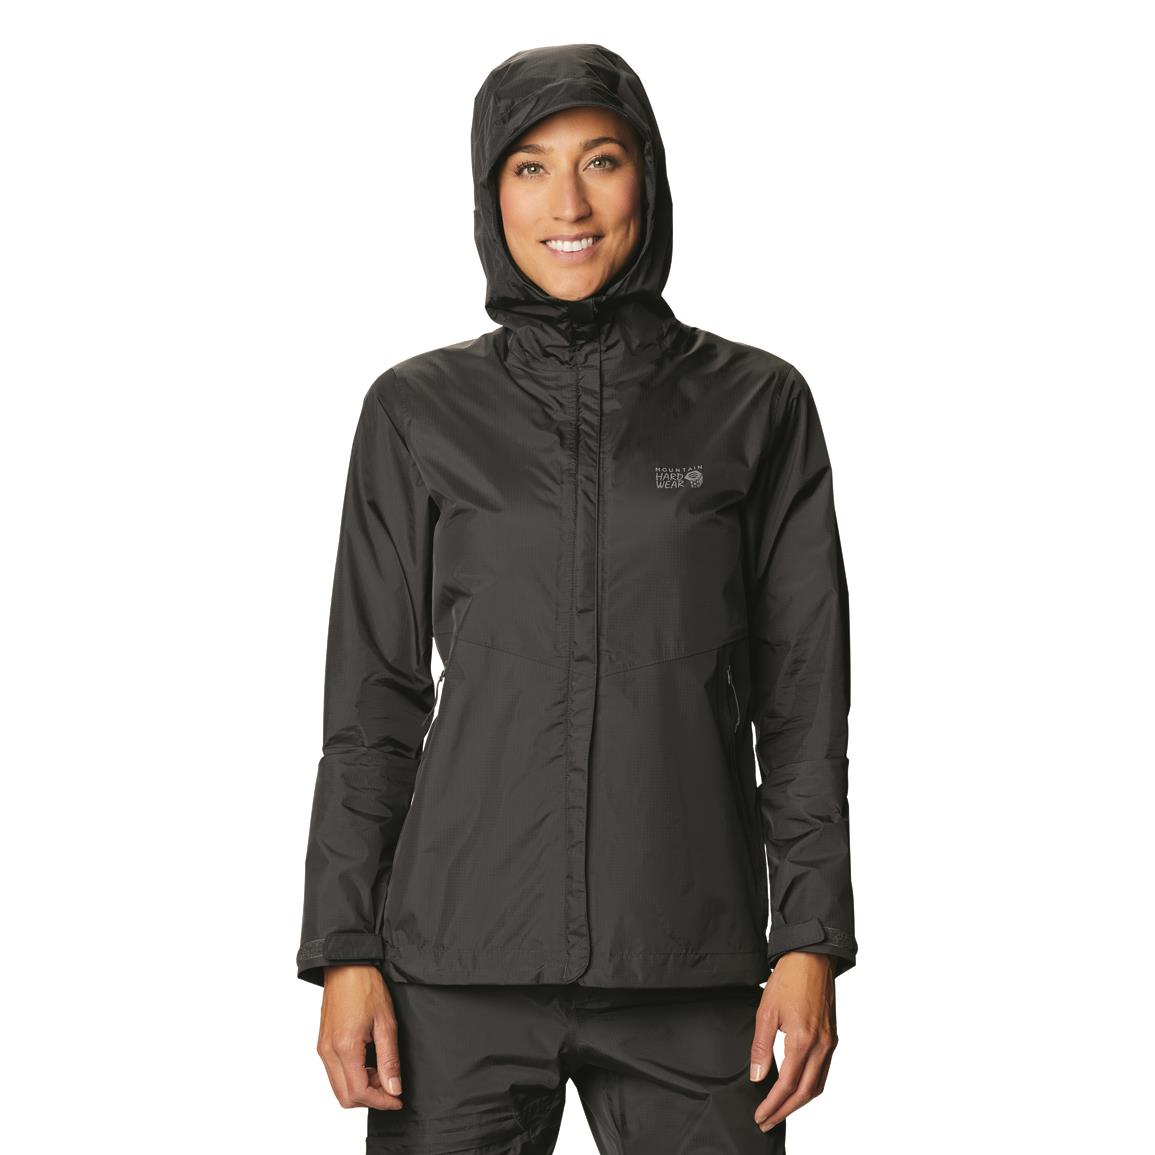 Under Armour Women's Storm ColdGear Infrared Shield 2.0 Jacket - 729979,  Jackets, Coats & Rain Gear at Sportsman's Guide